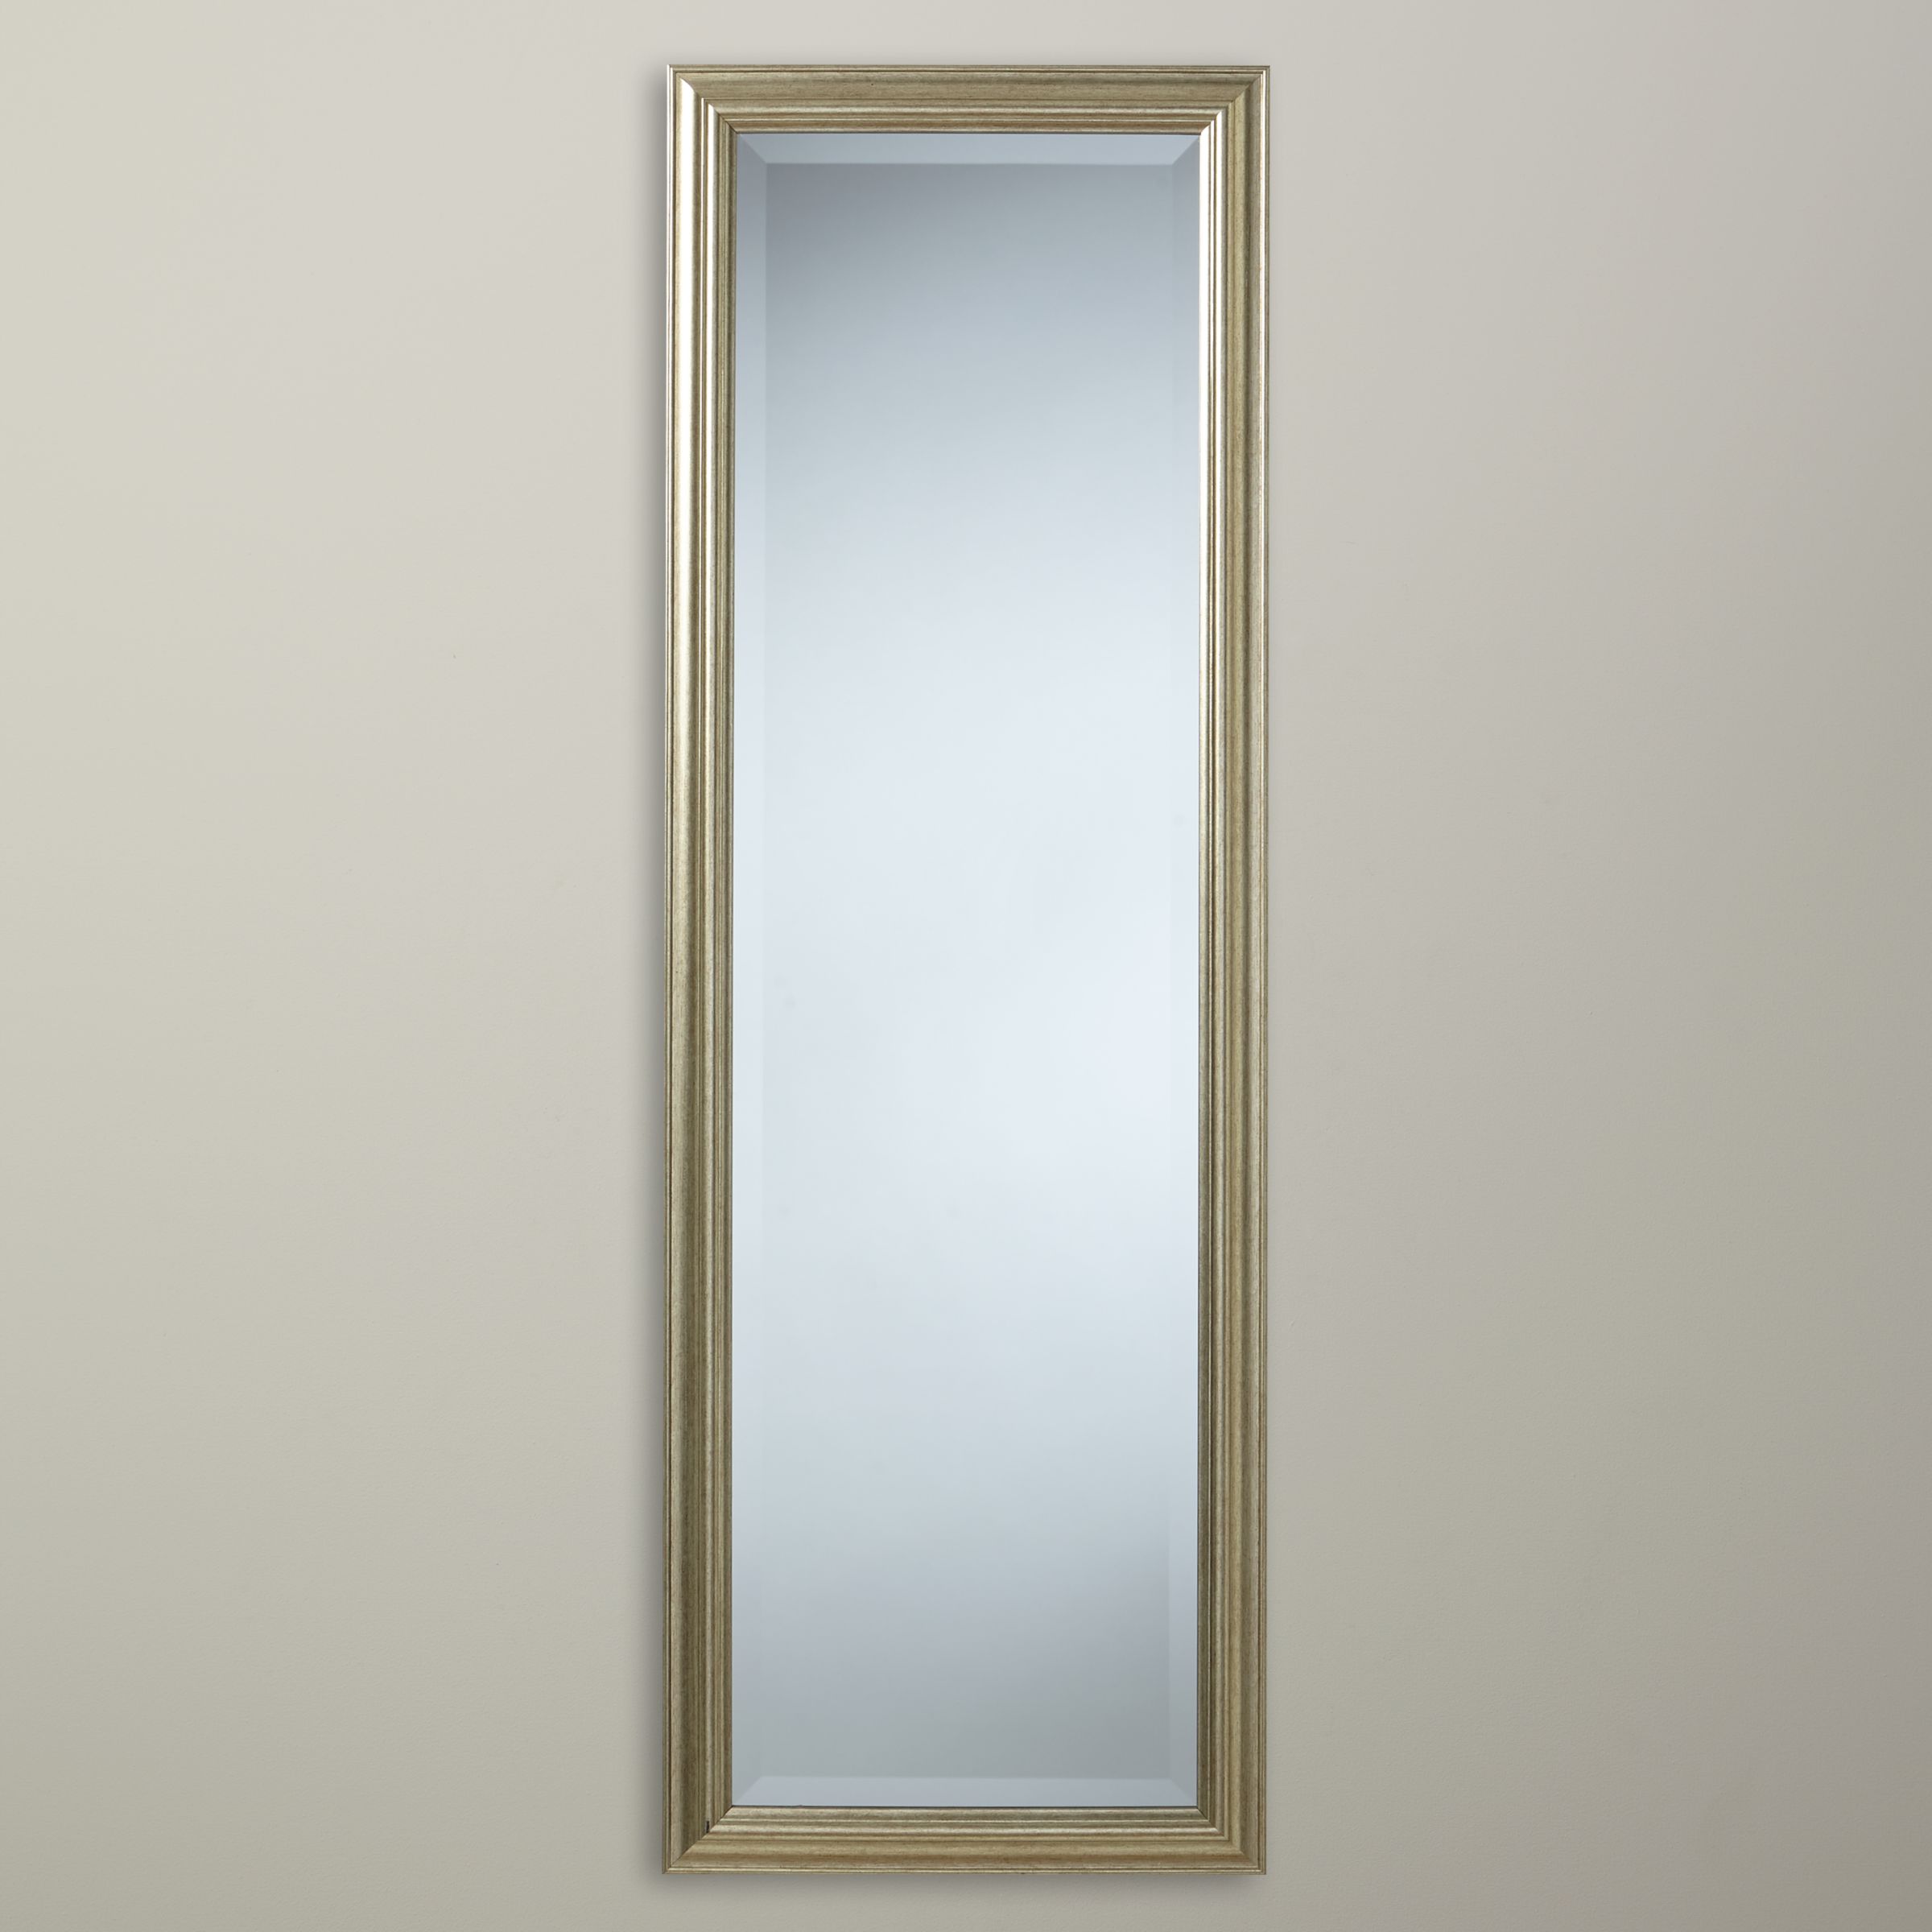 John Lewis & Partners Wilde Slim Full Length Mirror, 120 x 40cm, Gold